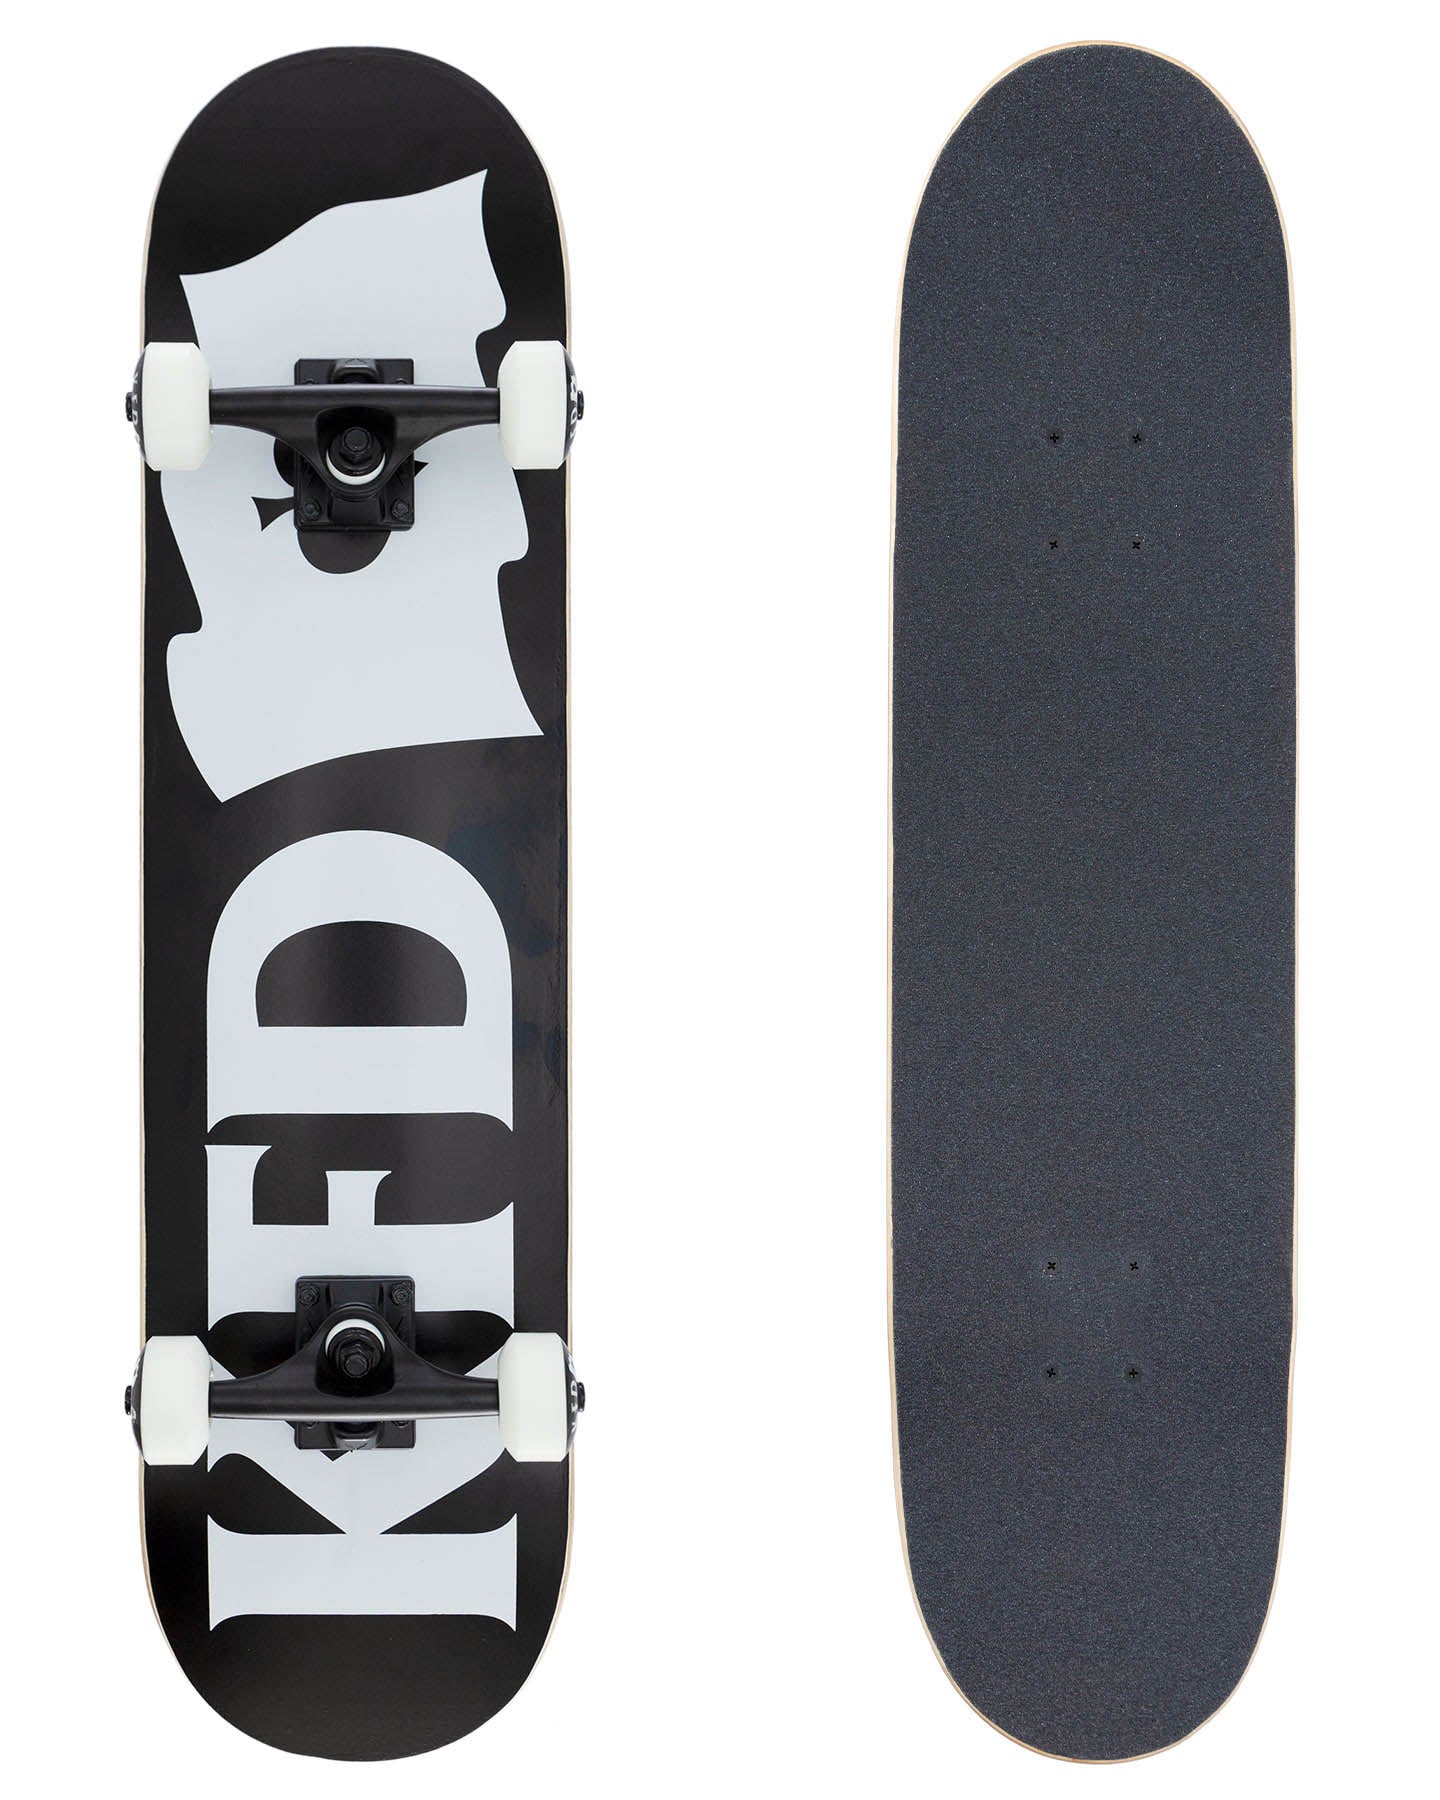 Kfd Complete Skateboard Young Gunz Flagship Black - 7.25"